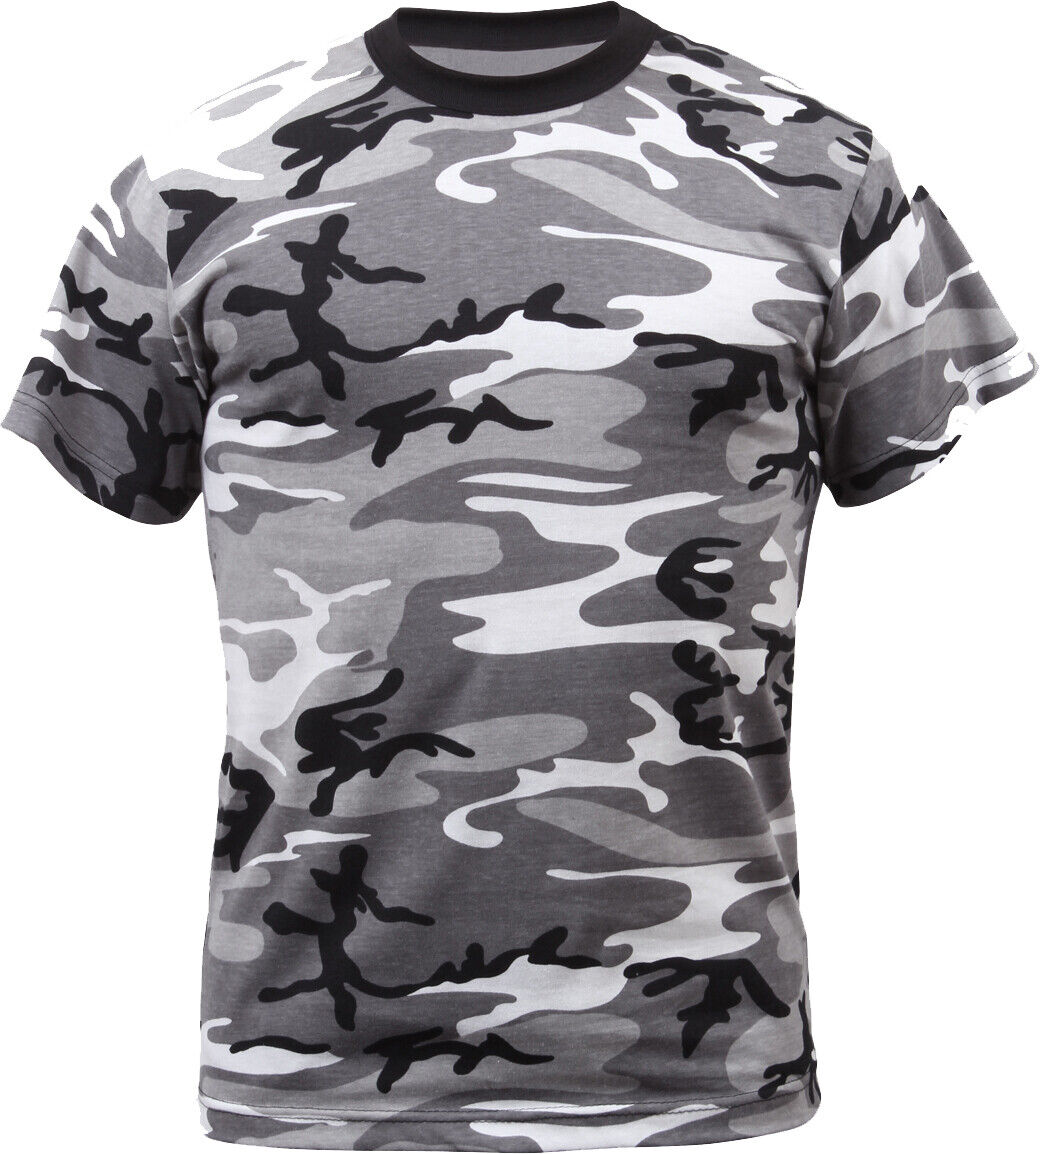 Camo T-Shirt Tactical Tee Short Sleeve Military Army Camouflage Uniform Fashion